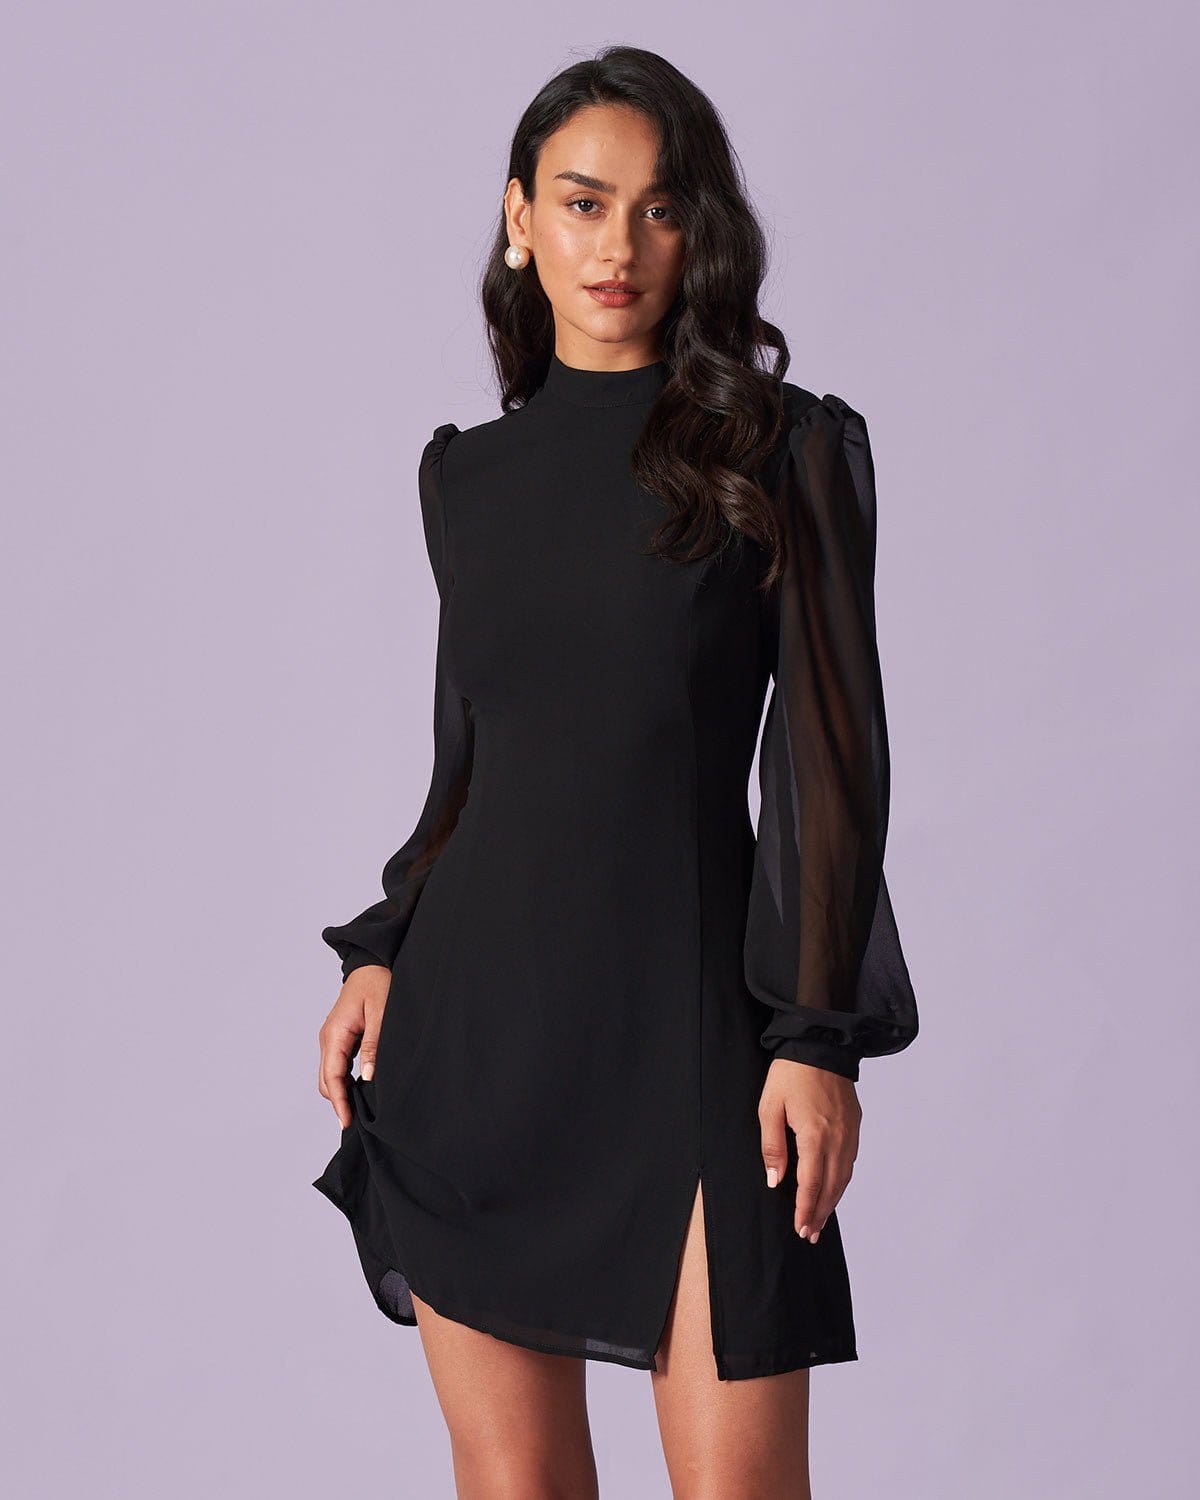 Yanfoam Sheer Sleeve Dress for Women Solid V Neck Belted Faux Wrap Short Dress  Black at Amazon Women's Clothing store